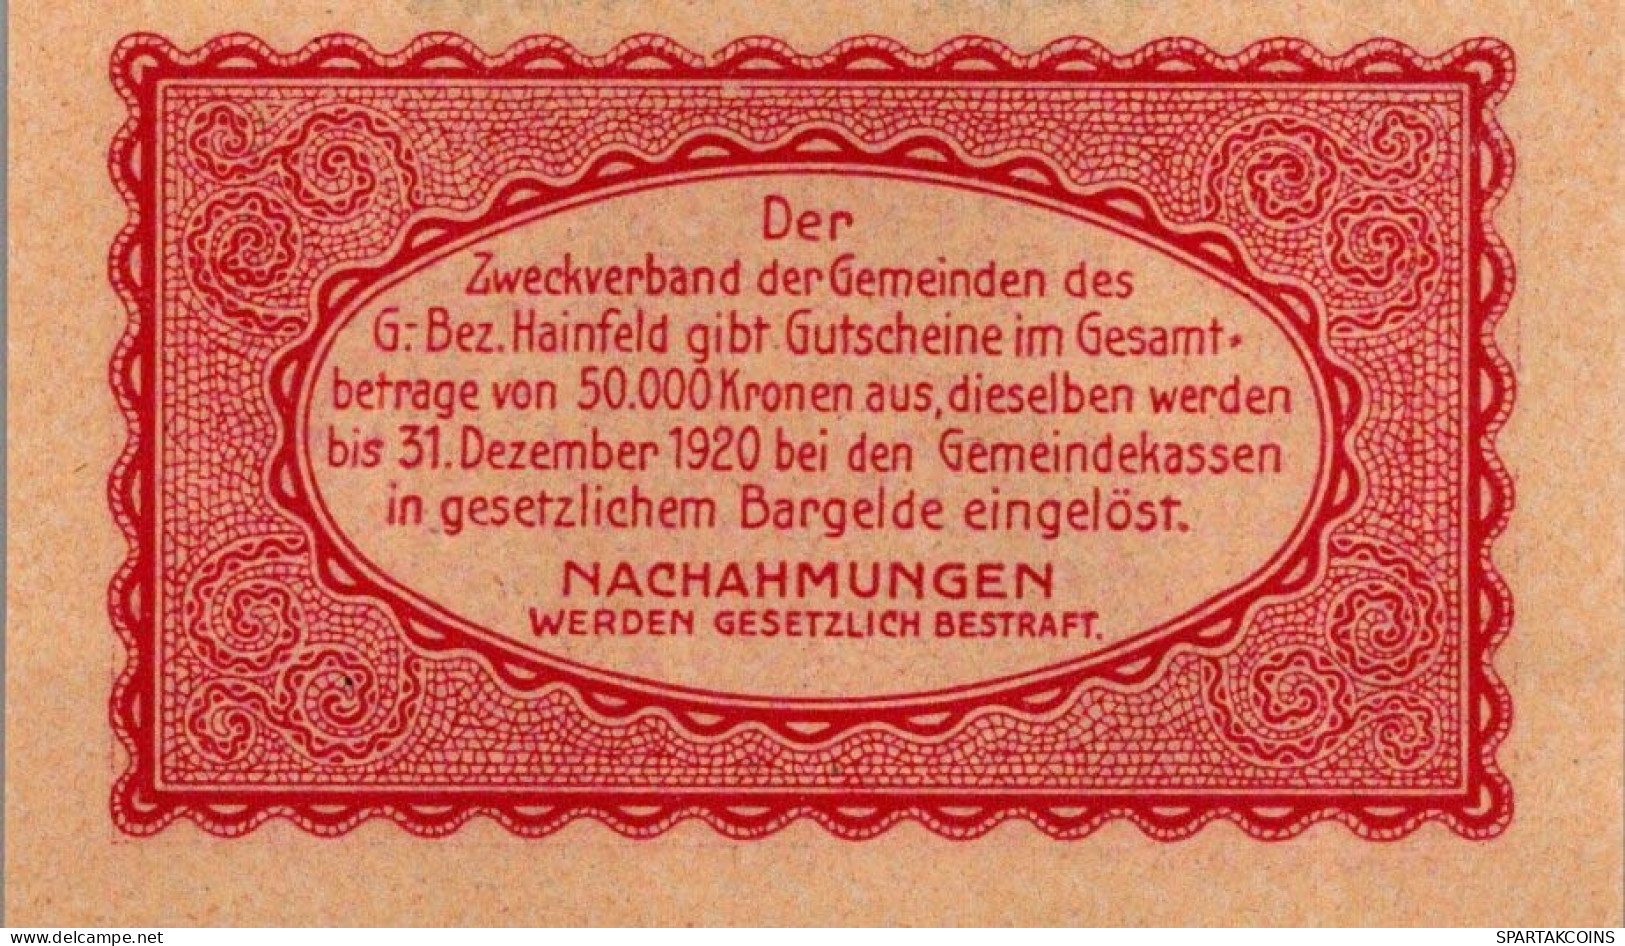 10 HELLER 1920 Stadt HAINFELD Niedrigeren Österreich Notgeld Papiergeld Banknote #PG775 - [11] Lokale Uitgaven